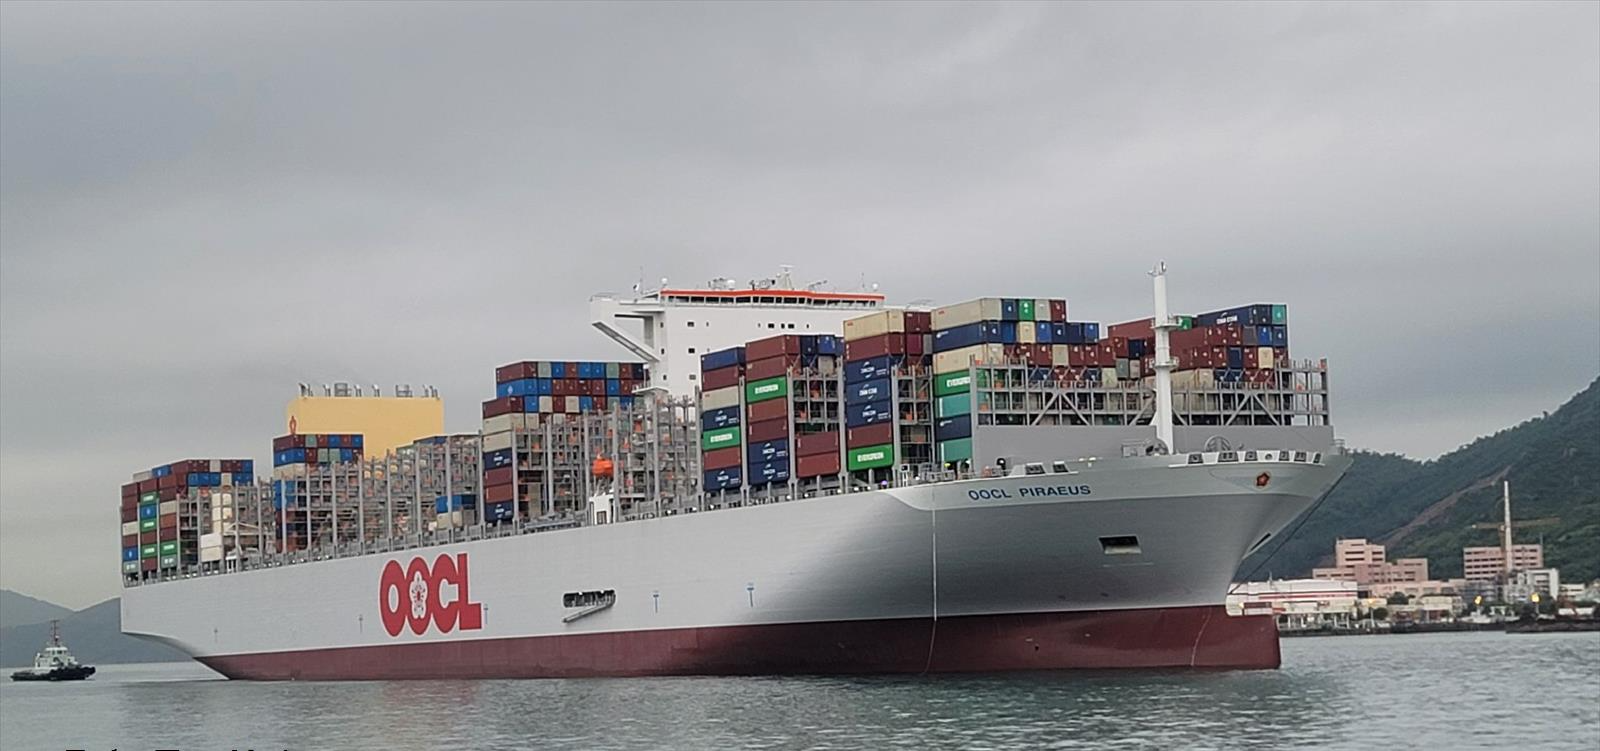 «OOCL Piraeus»: Στον Πειραιά ένα από τα μεγαλύτερα containerships παγκοσμίως [εικόνες]